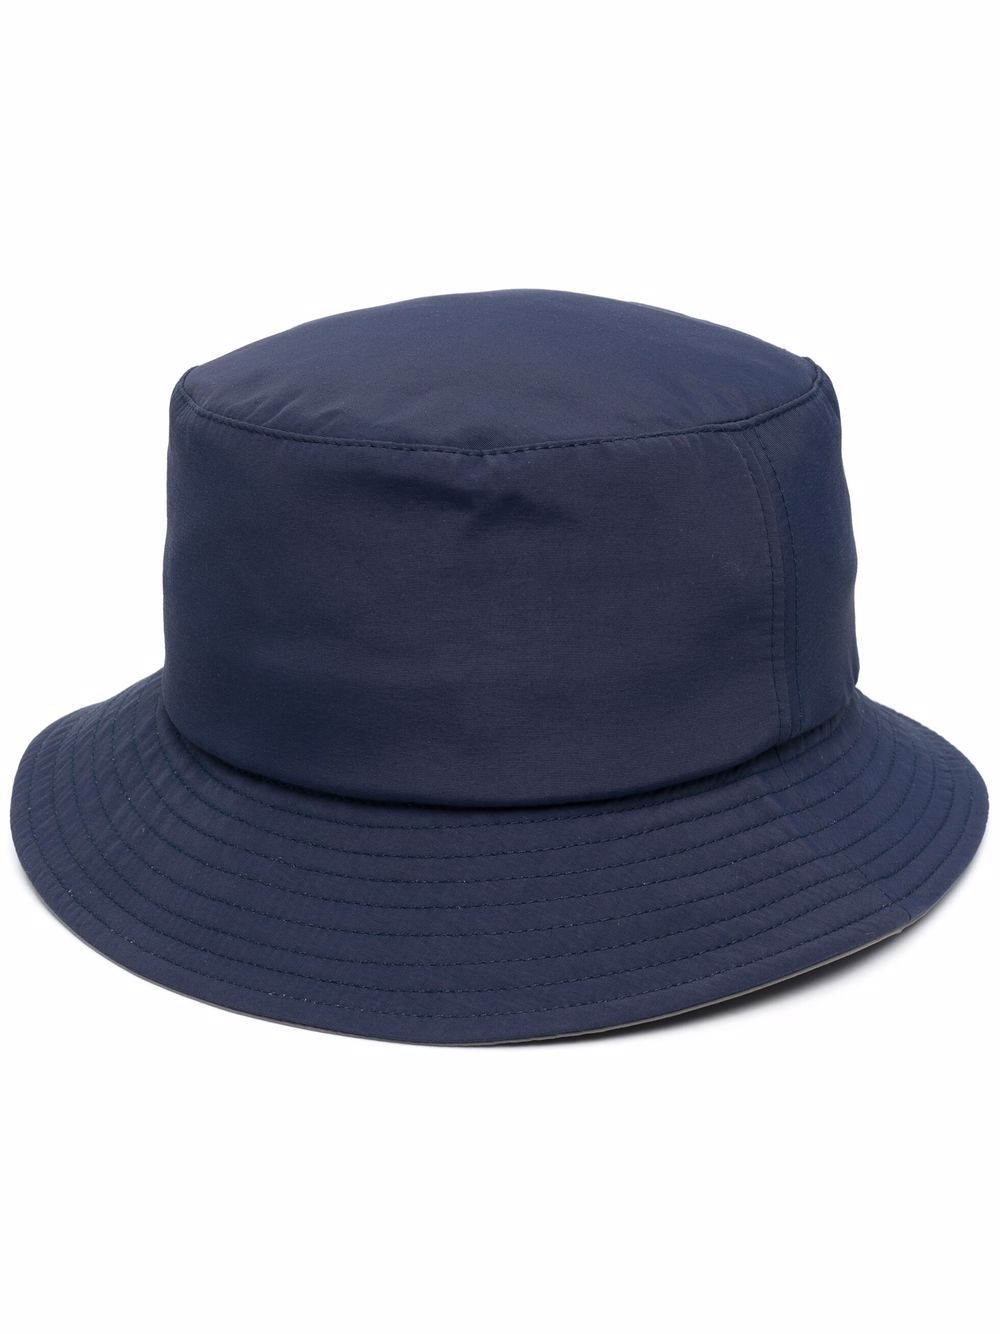 PS Paul Smith Stitched Bucket Hat - Farfetch